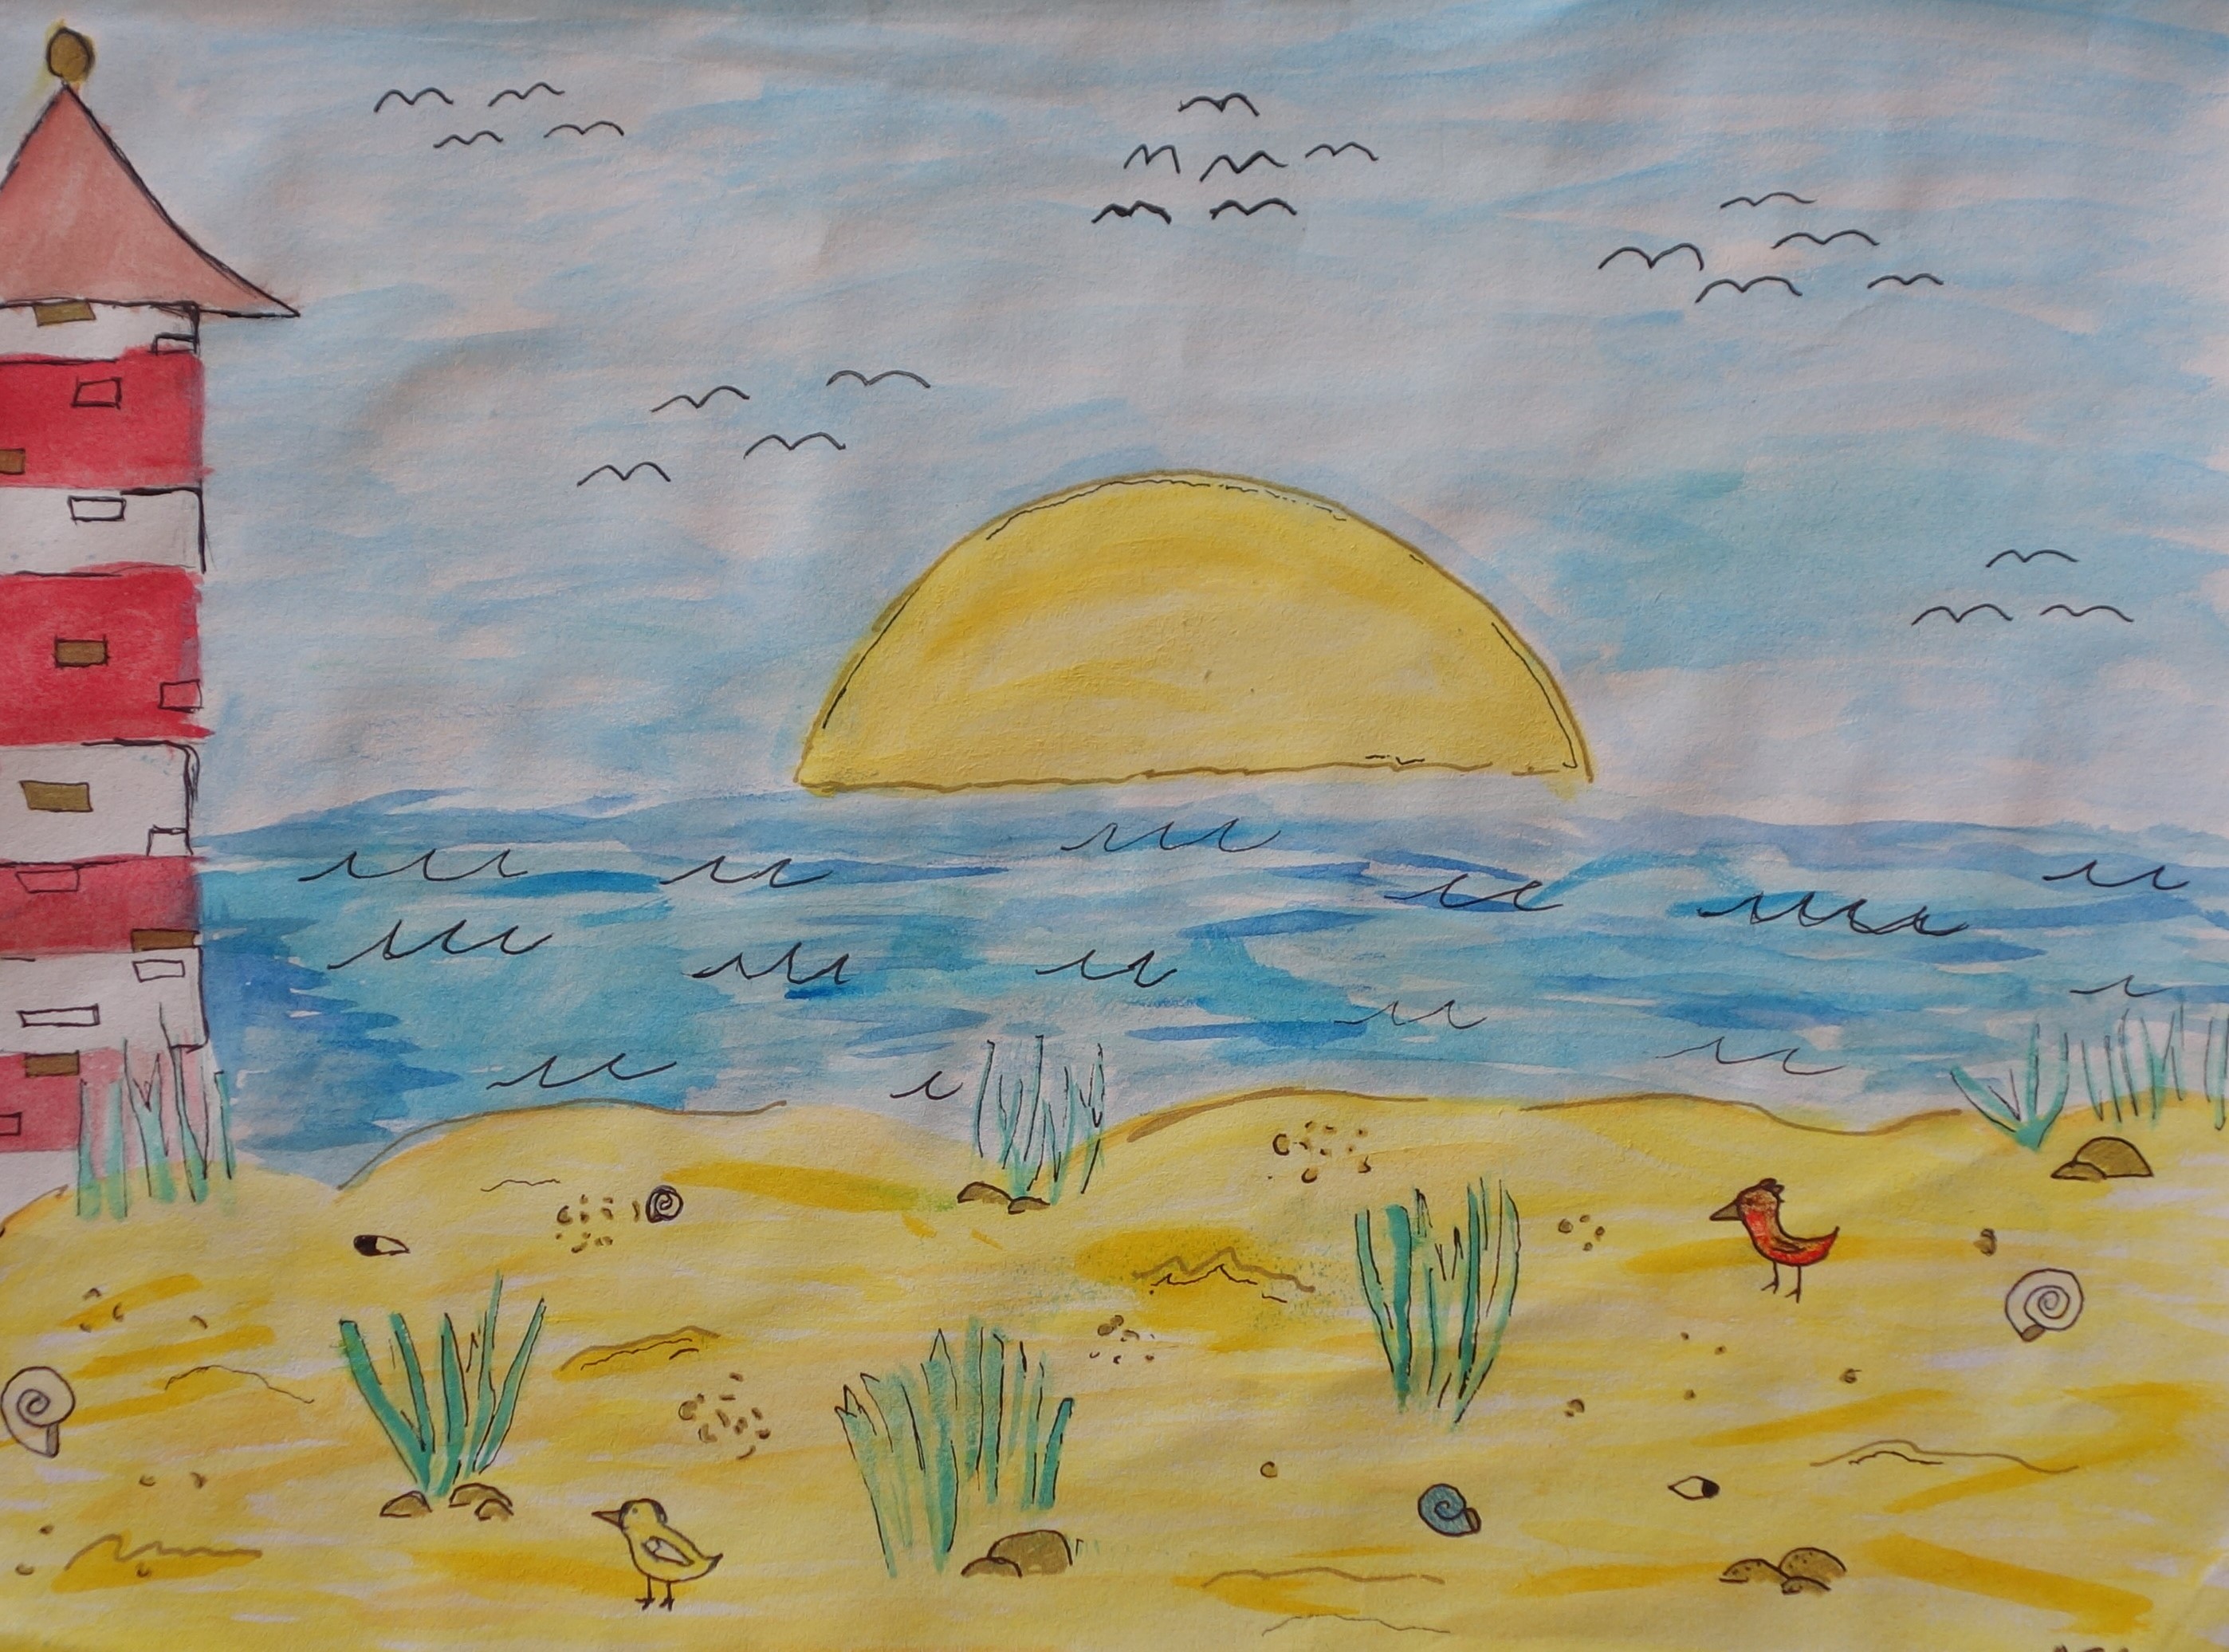 Children's art work depicting beach scene; for decorative purposes.